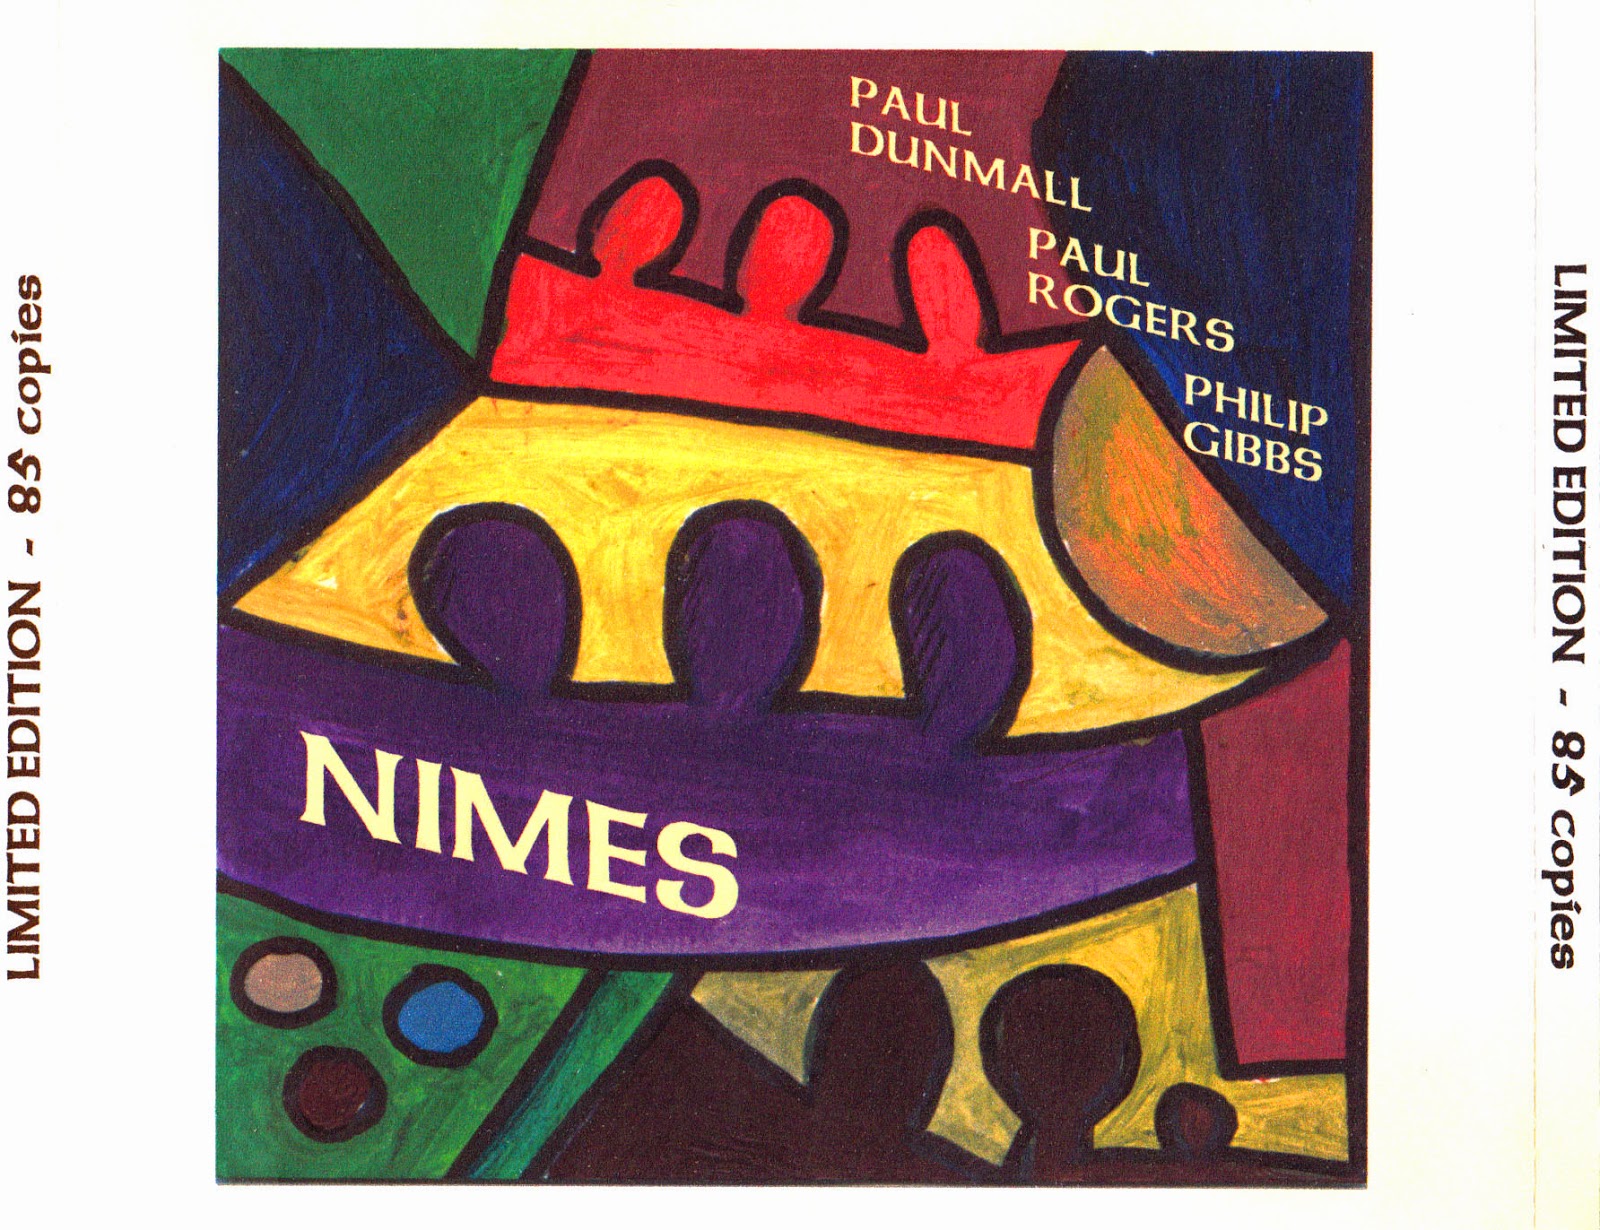 PAUL DUNMALL - Nimes cover 